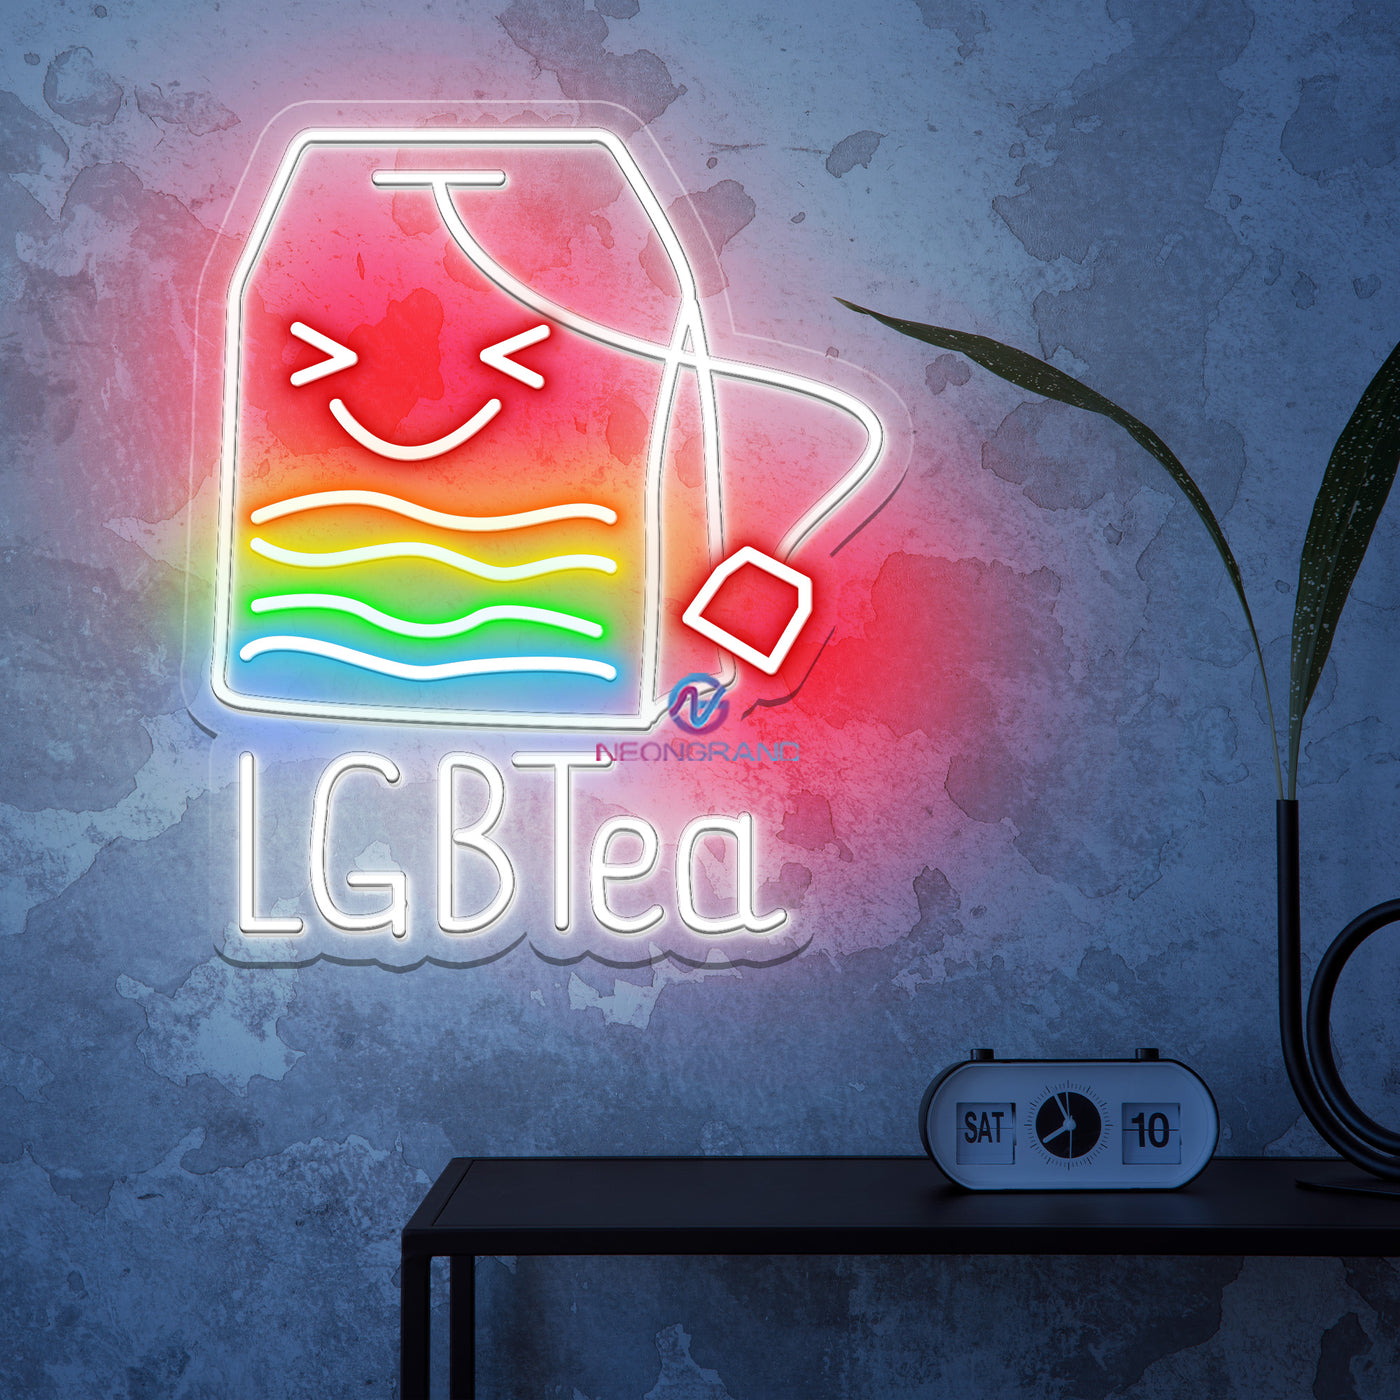 LGBT Neon Signs Led Light, LGBTea Pride Neon Sign